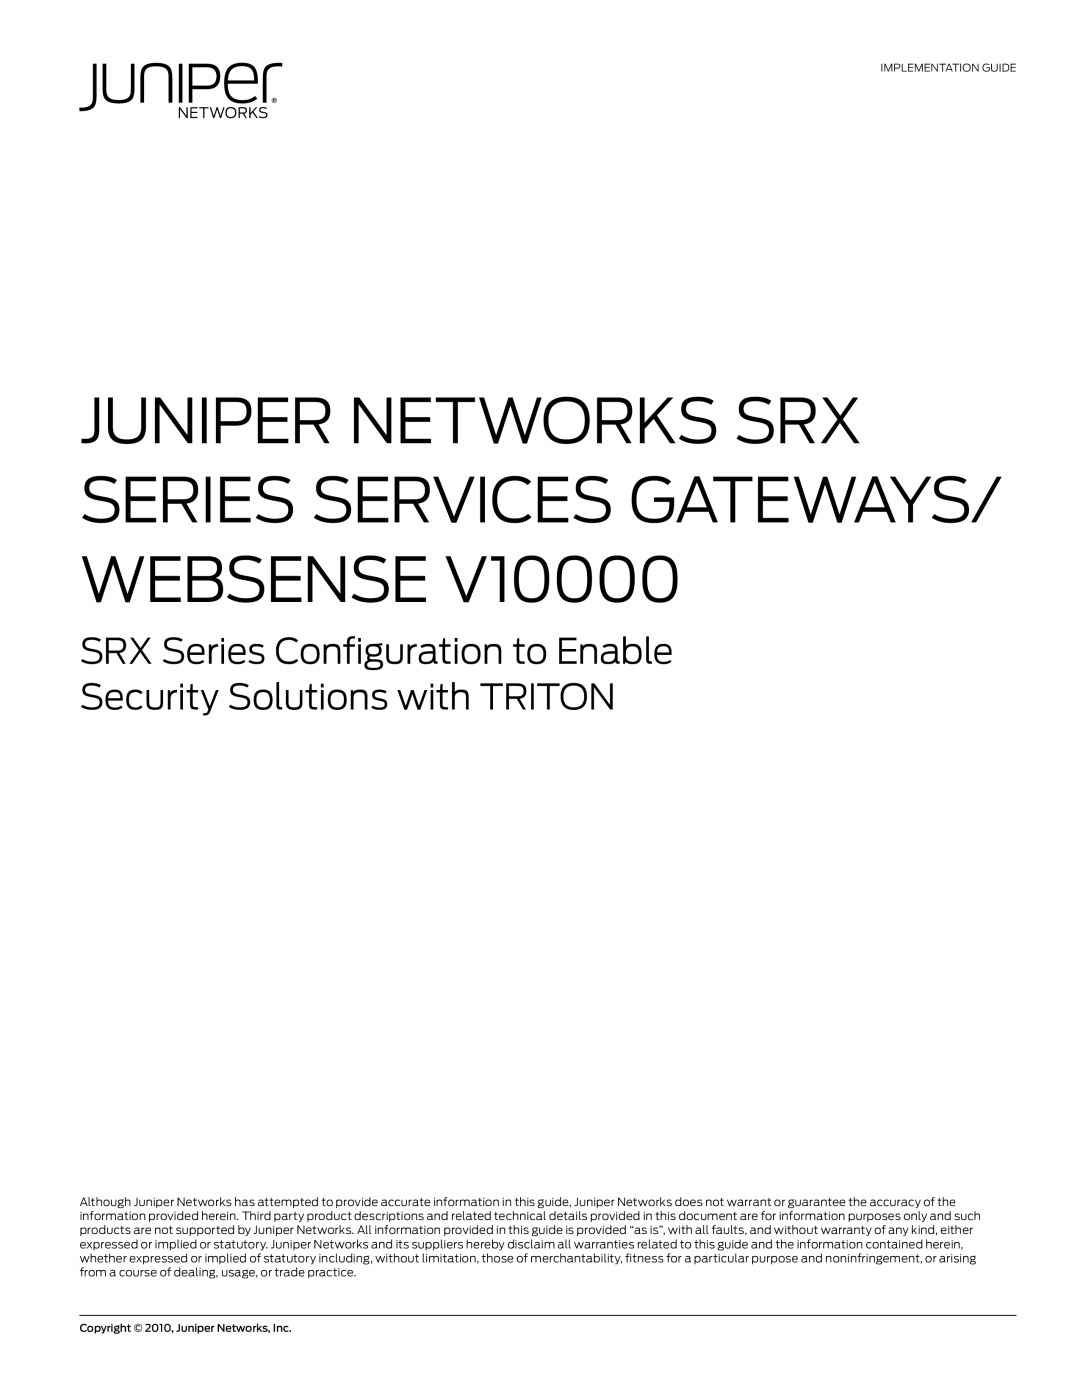 Juniper Networks V10000 warranty Juniper Networks Srx Series Services Gateways/ Websense 